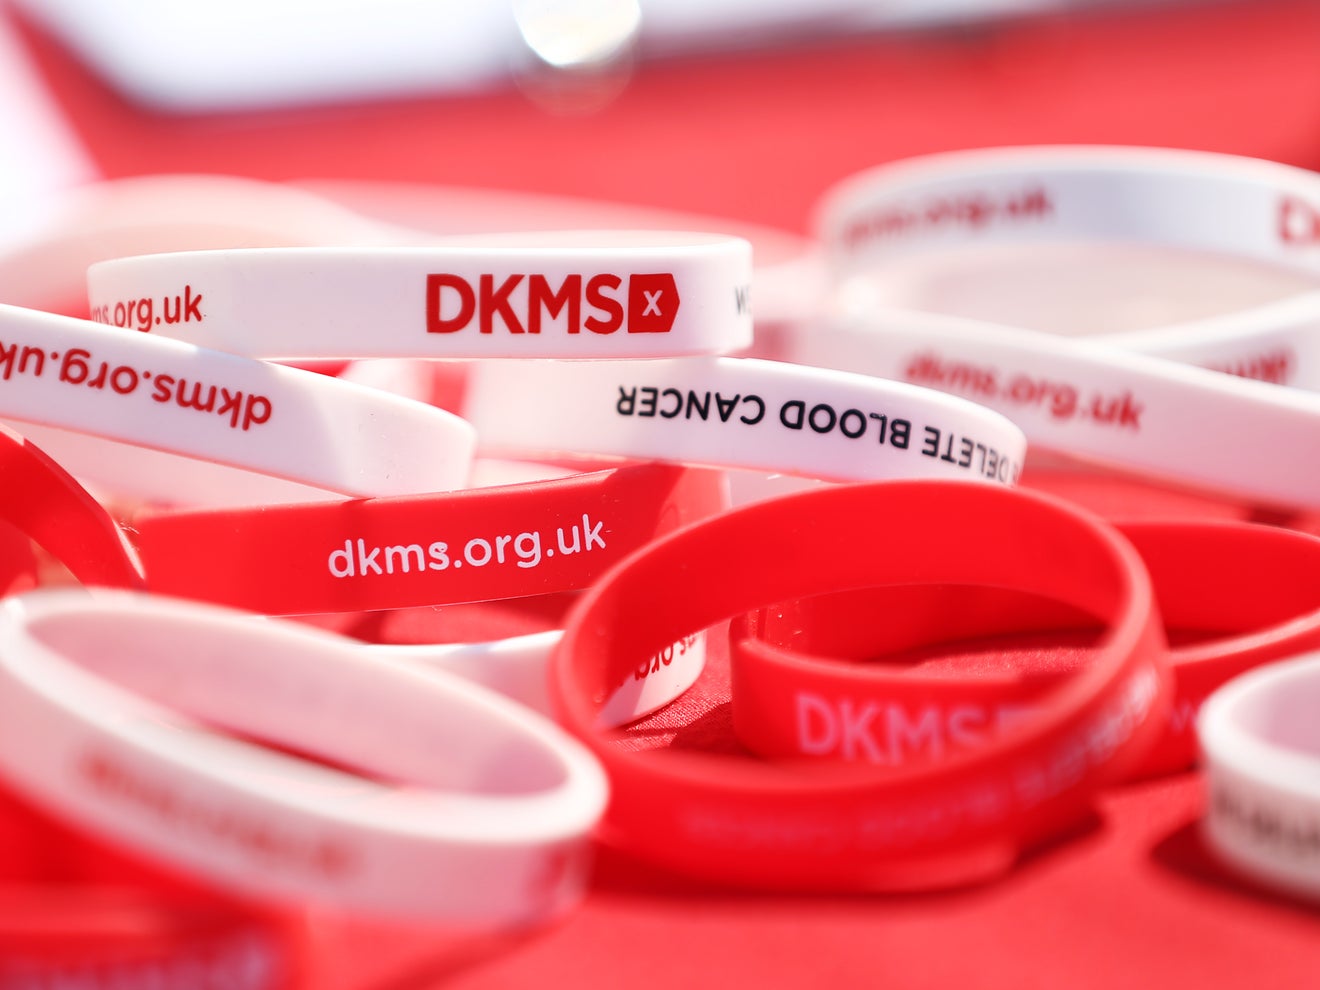 DKMS wristbands